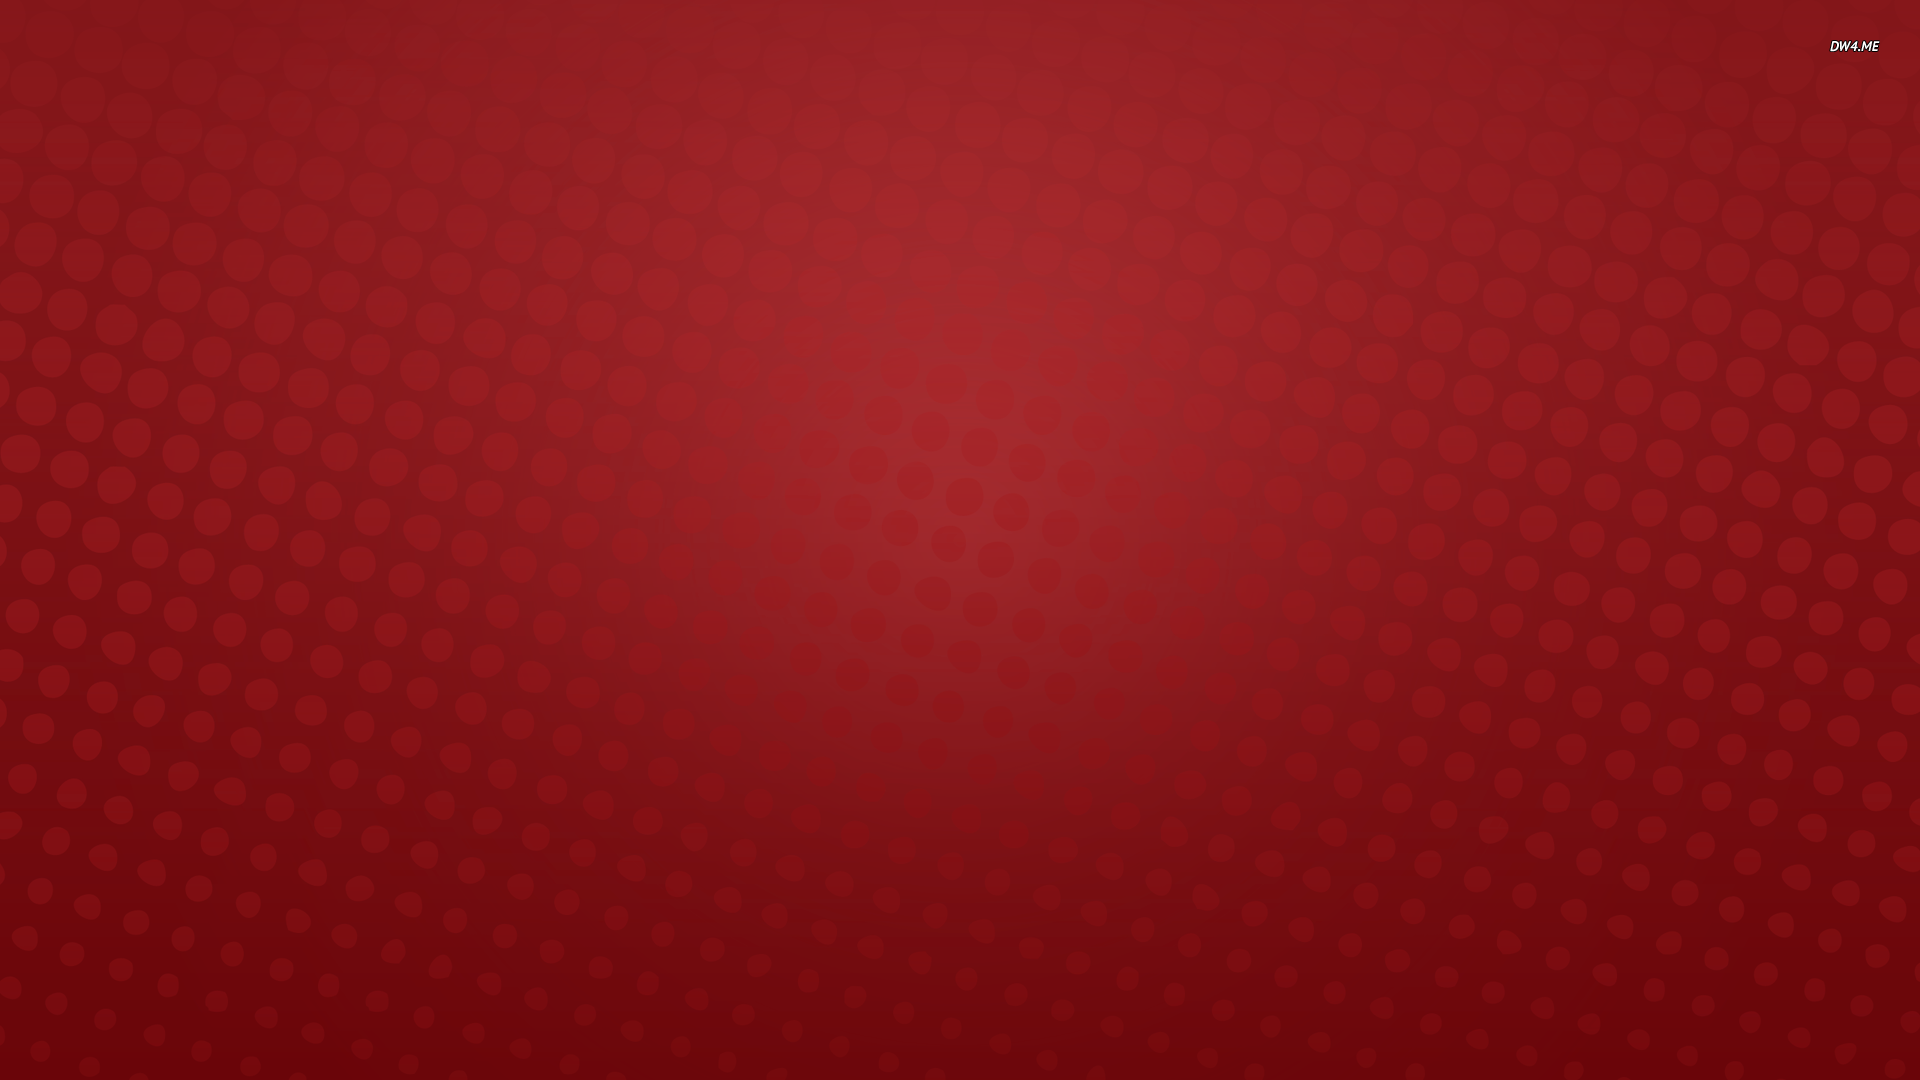 Red Desktop Background. Beautiful Widescreen Desktop Wallpaper, Desktop Wallpaper and Naruto Desktop Background